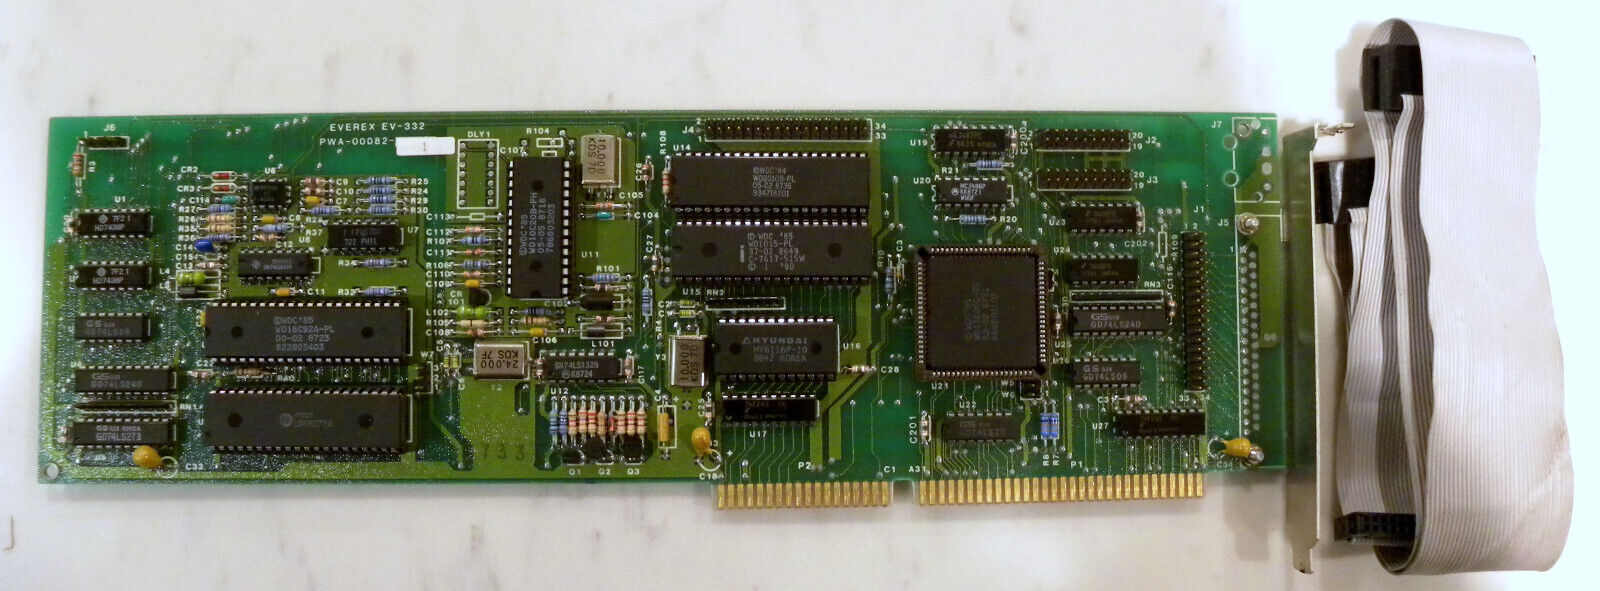 EVEREX EV-332 Hard Disk/Floppy Controller 16-Bit ISA Card PC/XT/AT  